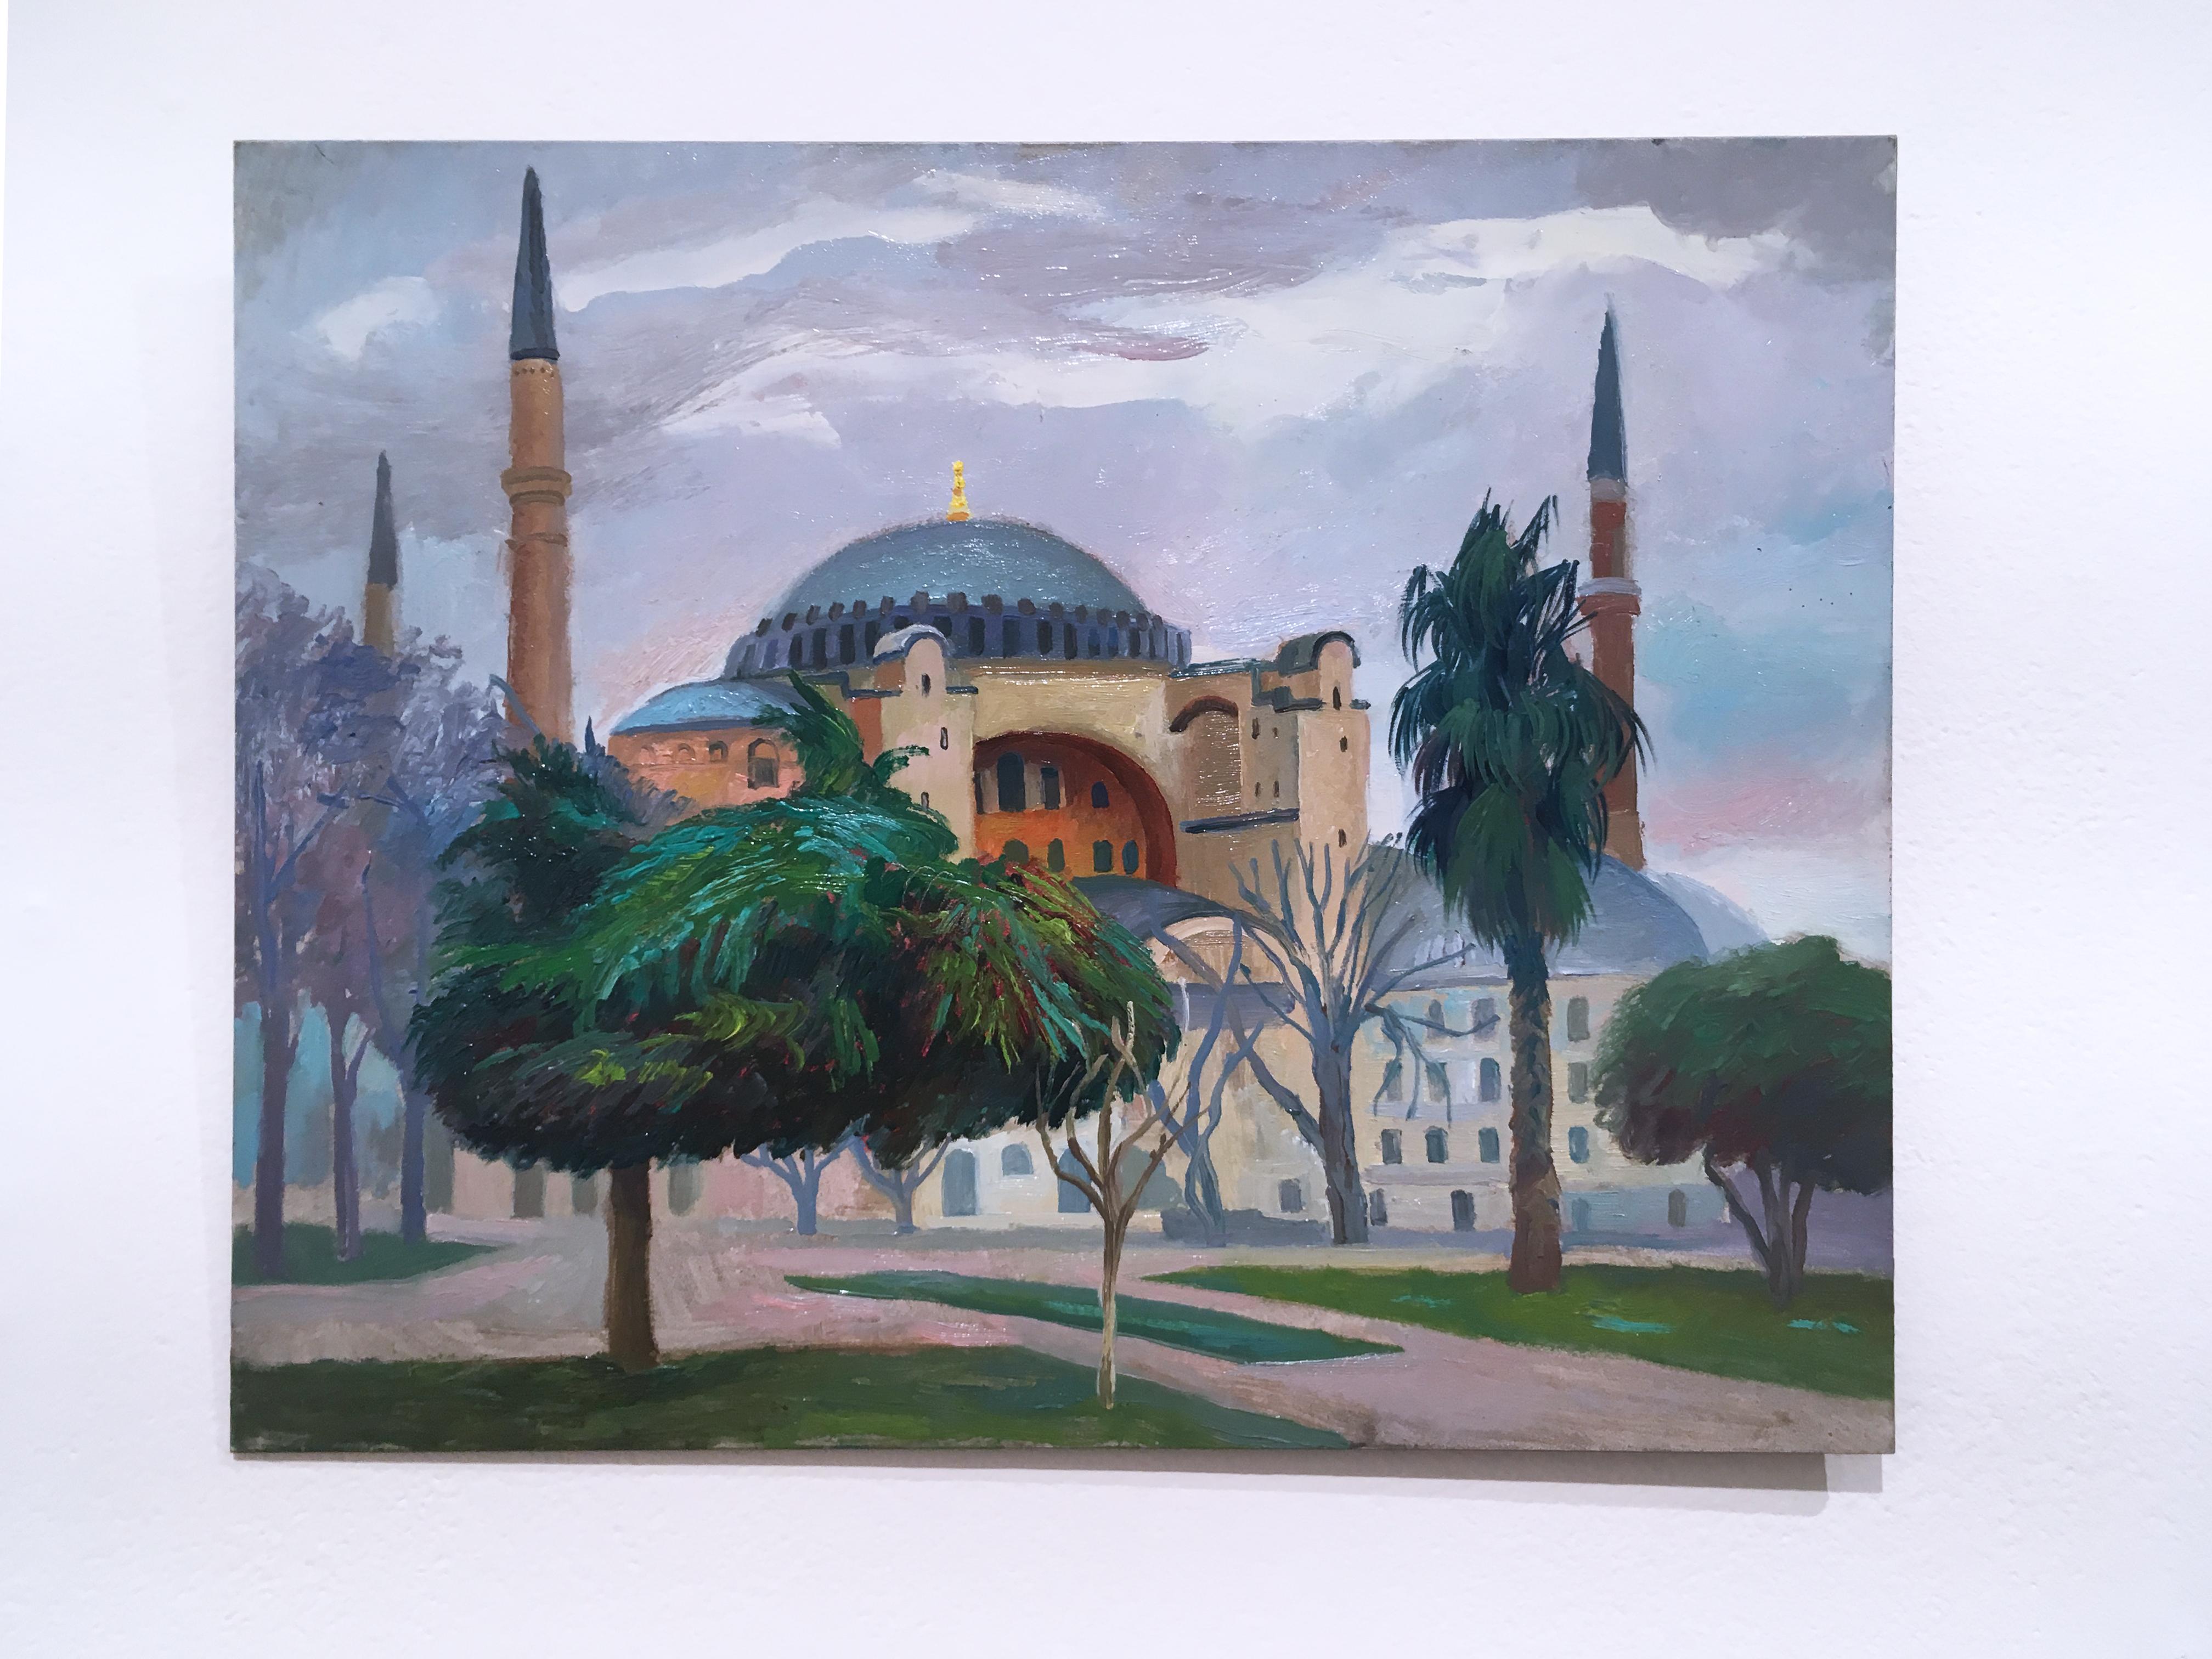 Istanbul Hagia Sophia, plein air figurative, landscape, oil on panel, 2014